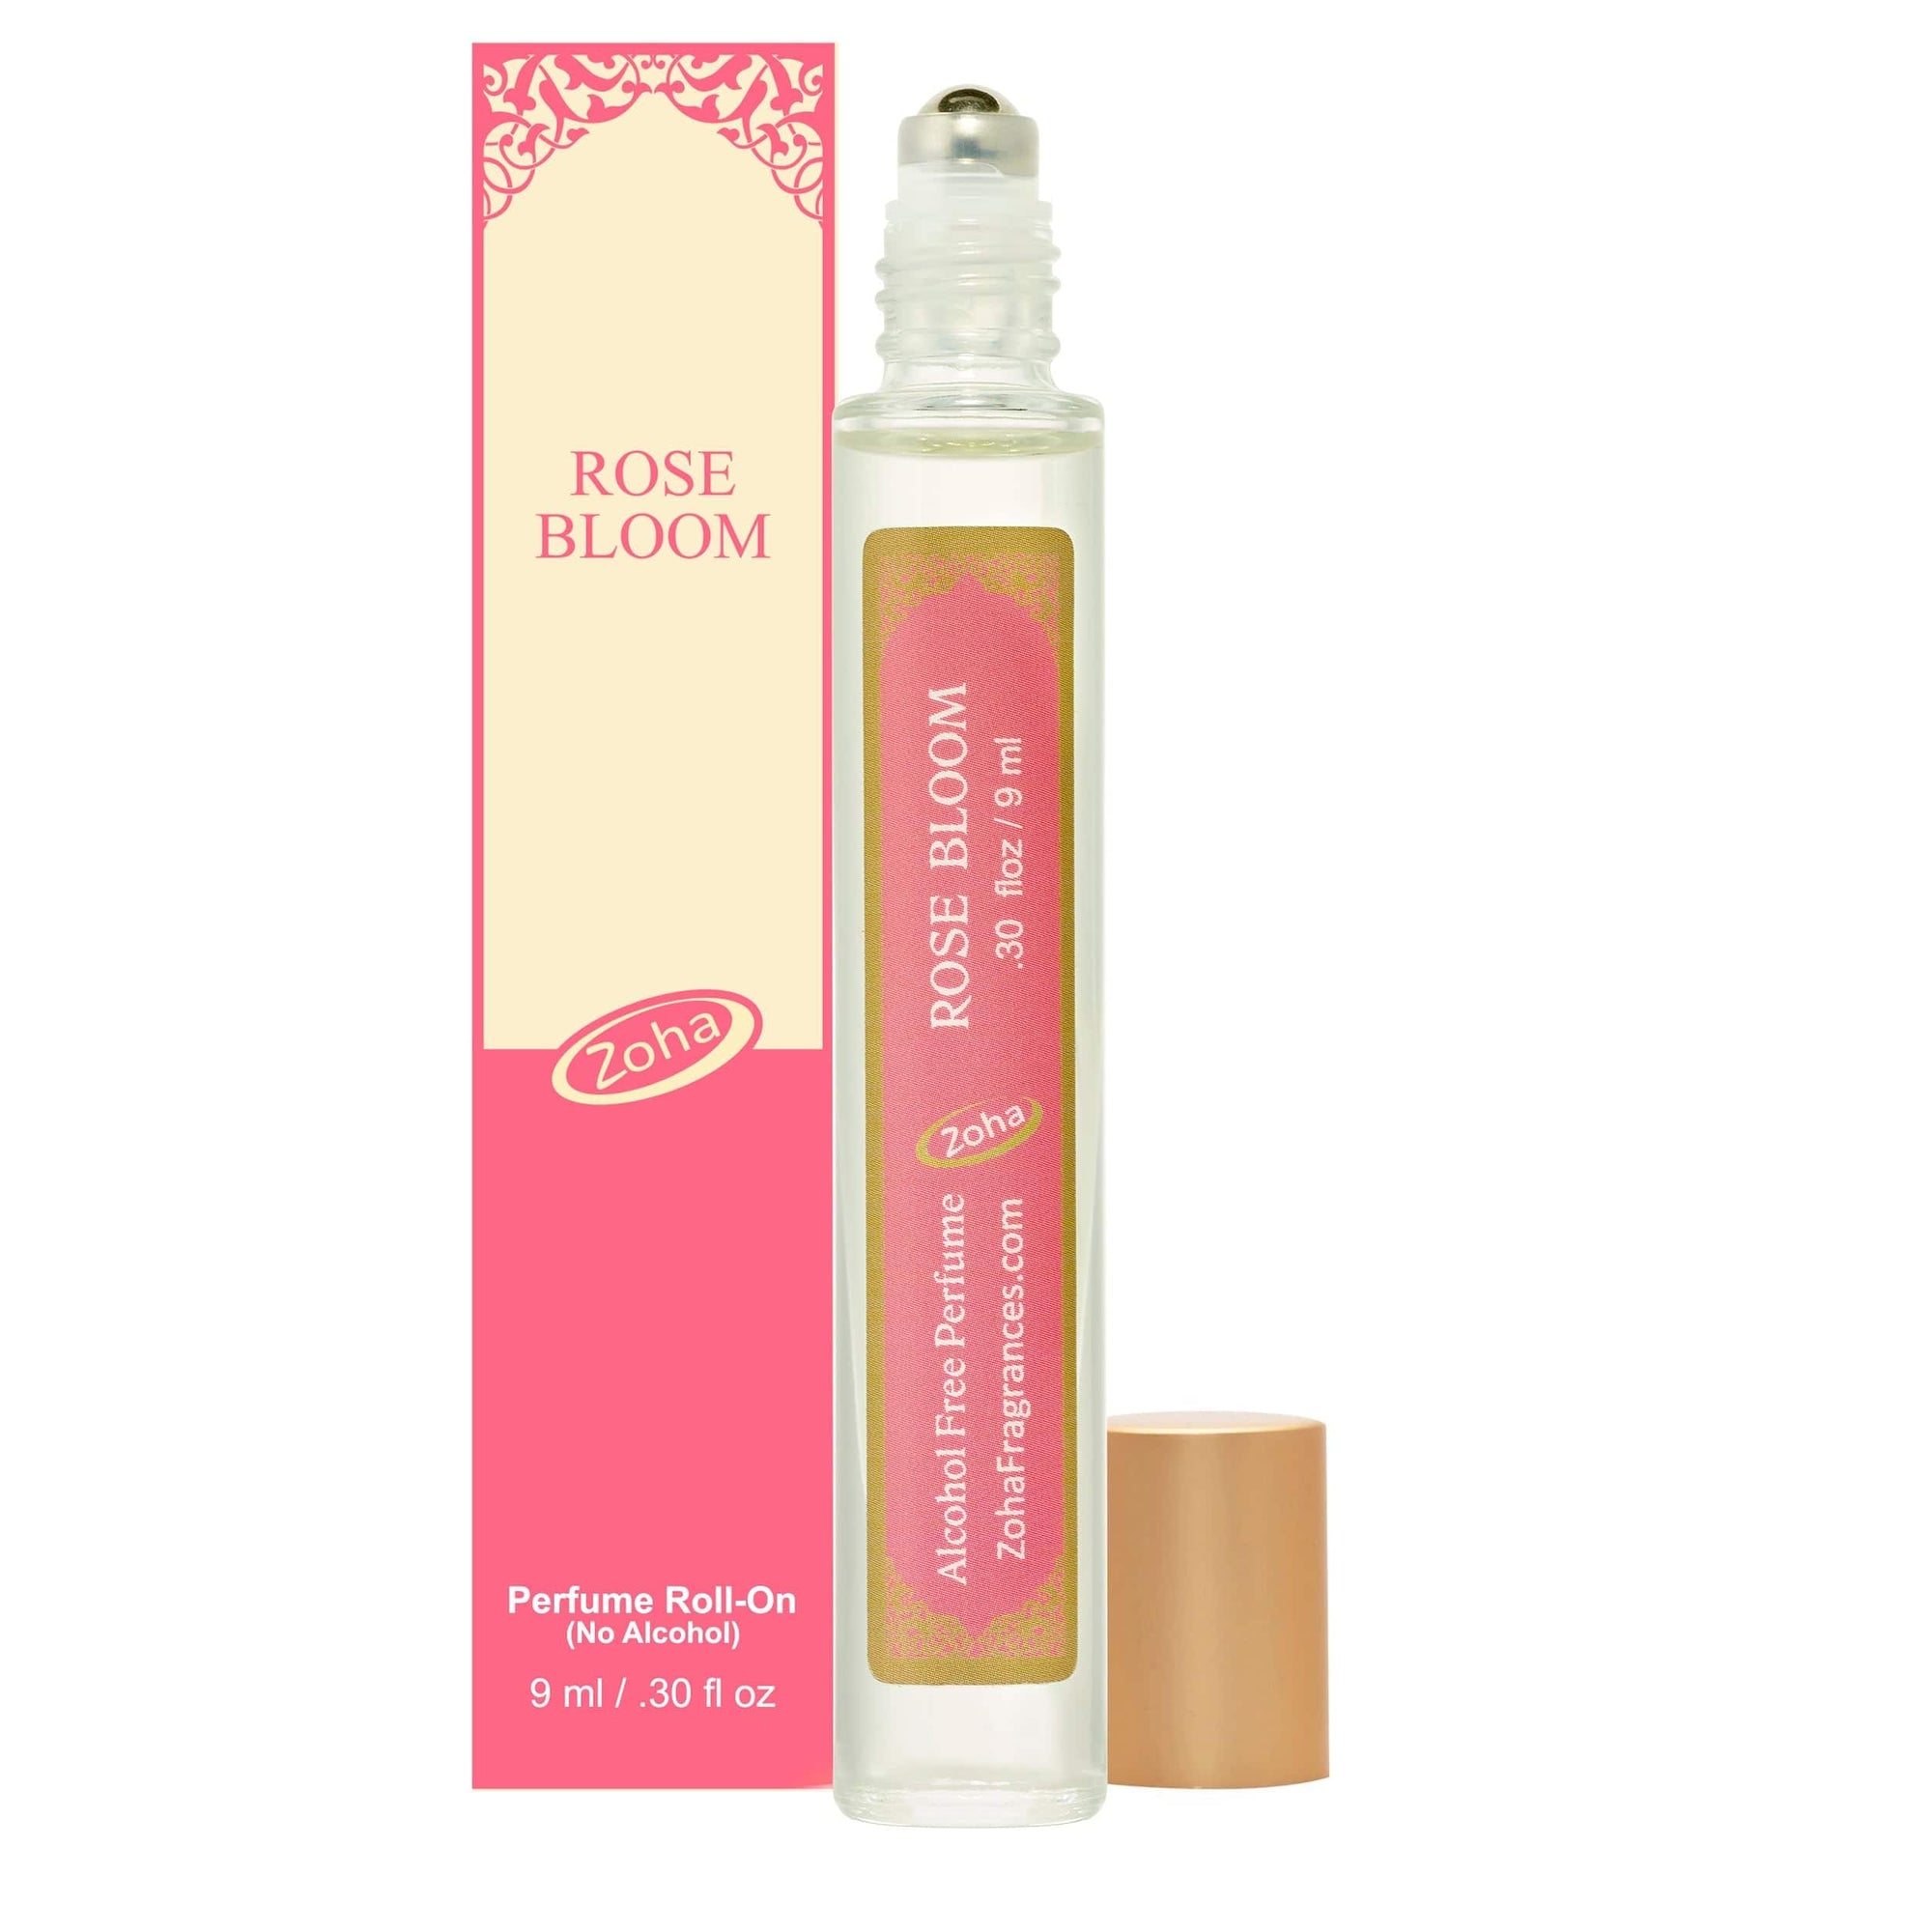 Rose Bloom Perfume for Women and Men - Zoha Fragrances